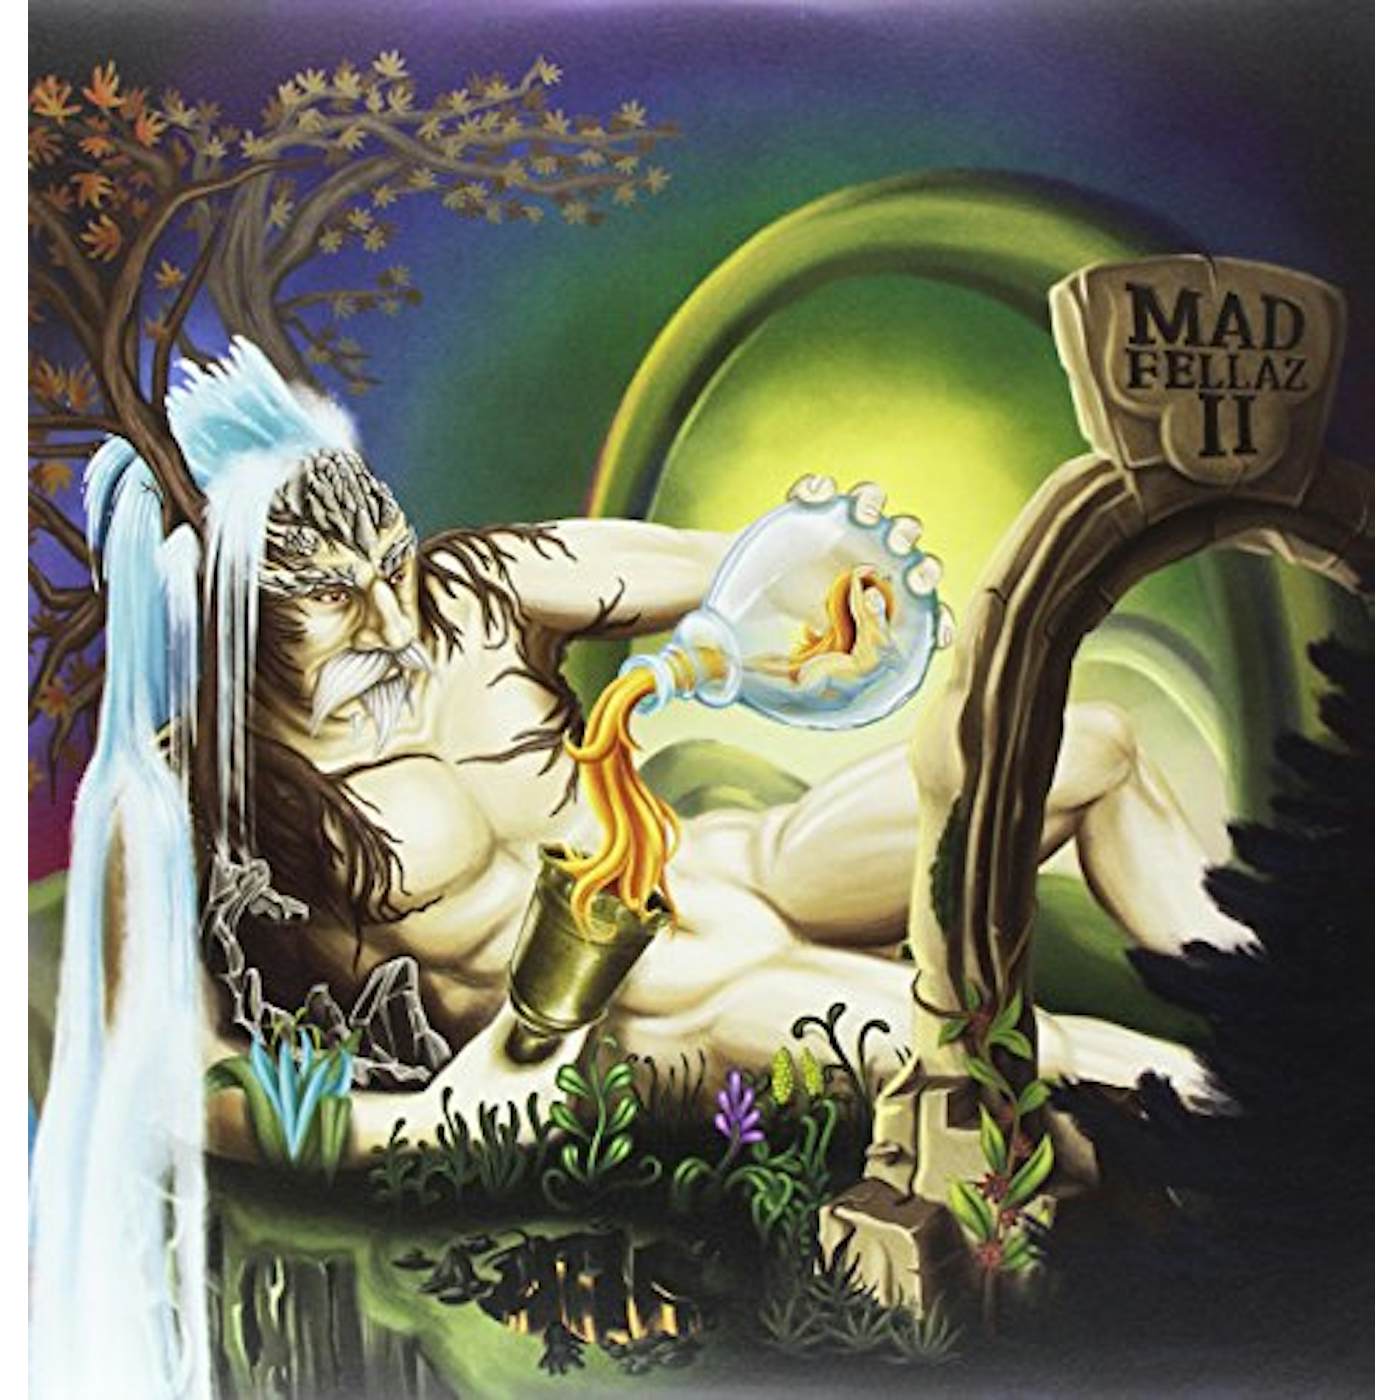 Mad Fellaz II Vinyl Record